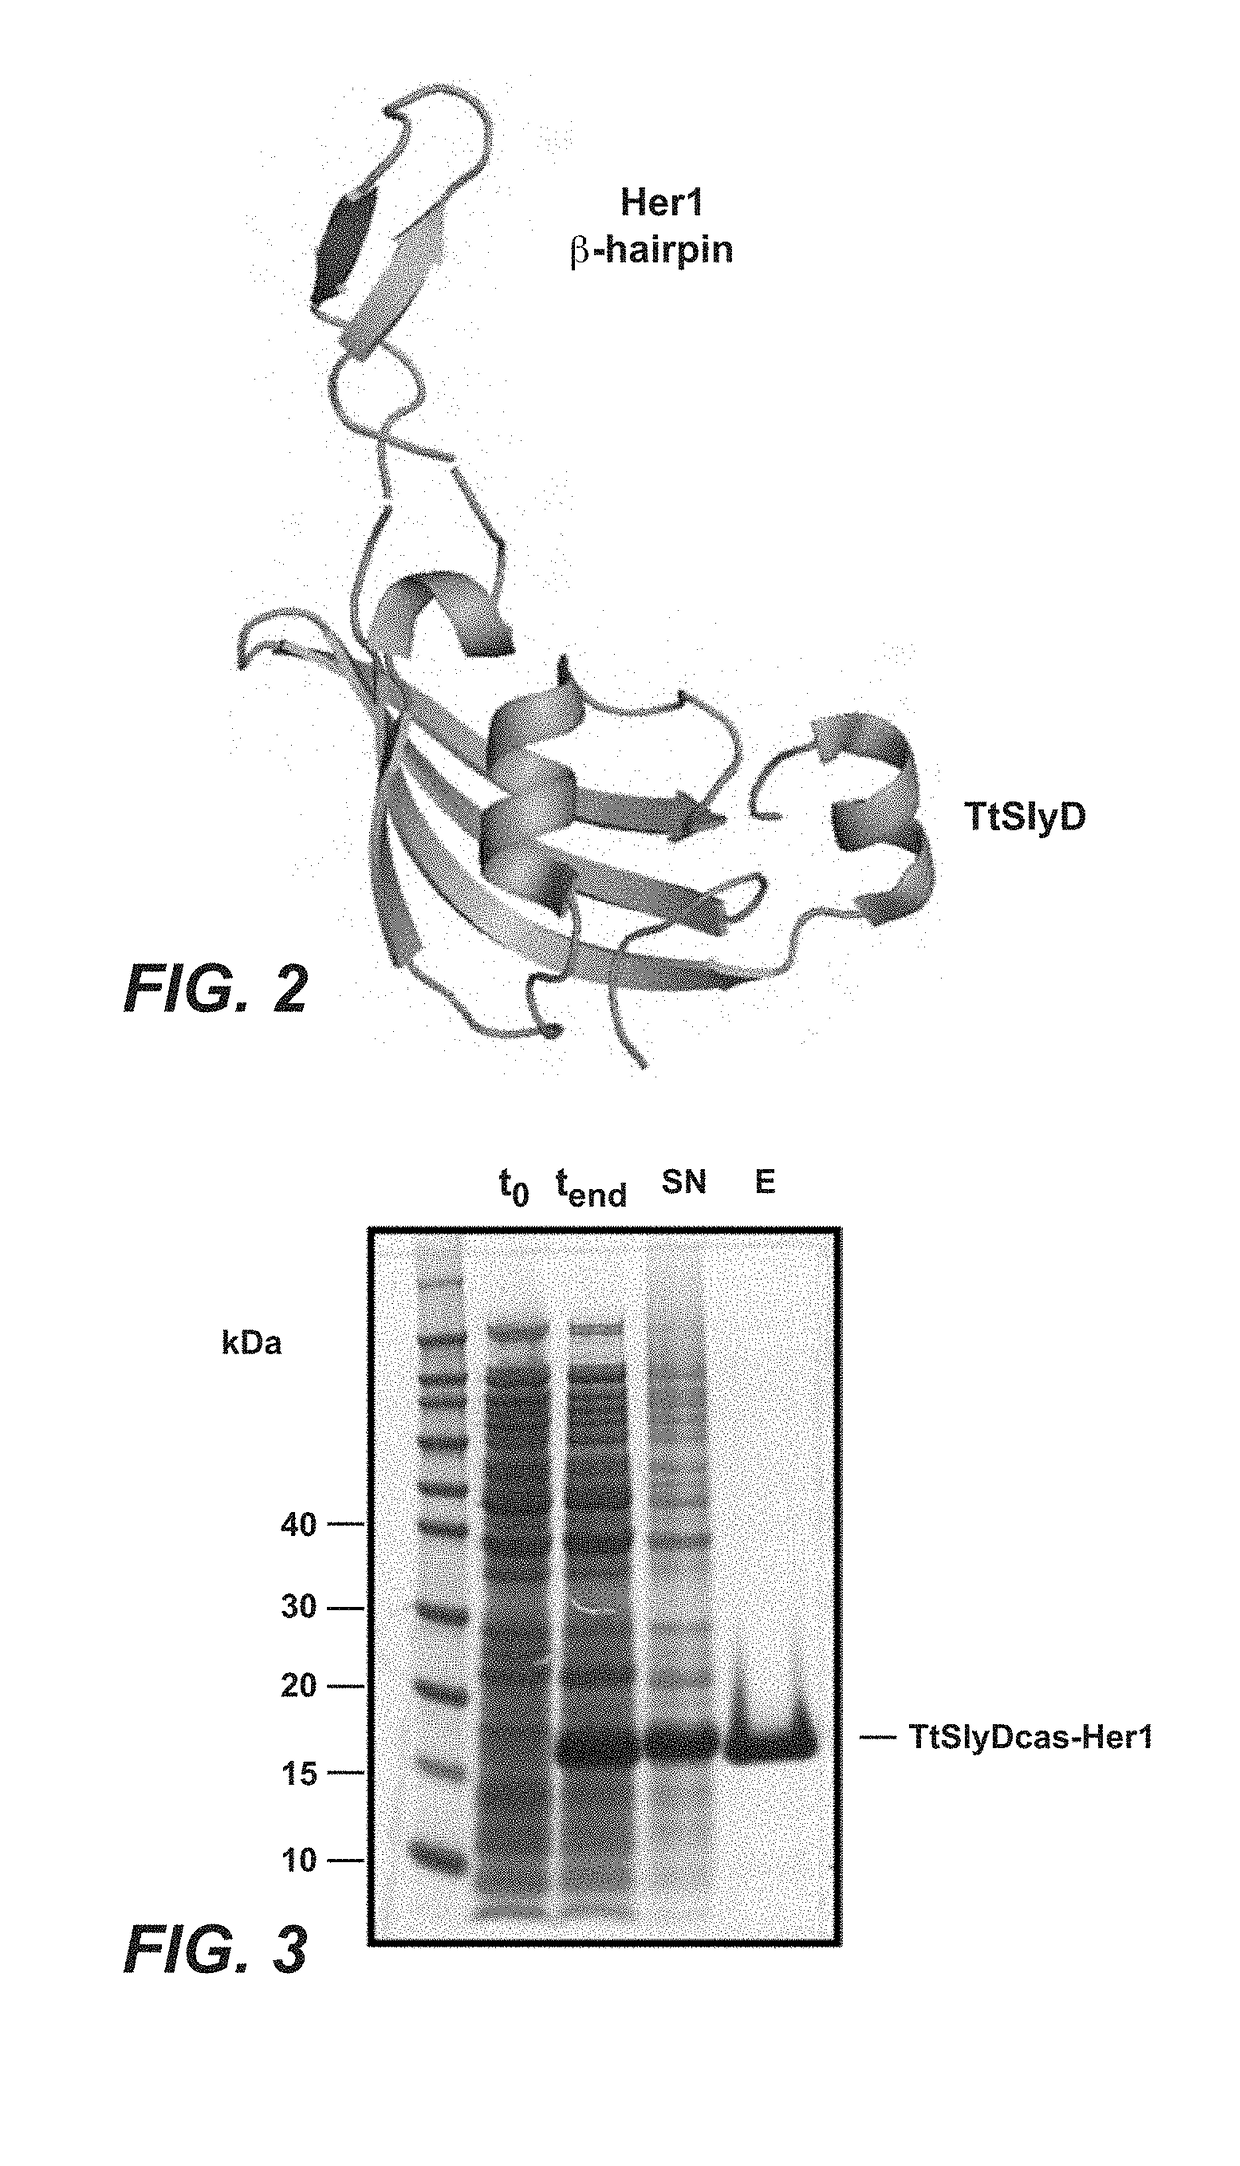 HER1 antigen binding proteins binding to the beta-hairpin of HER1